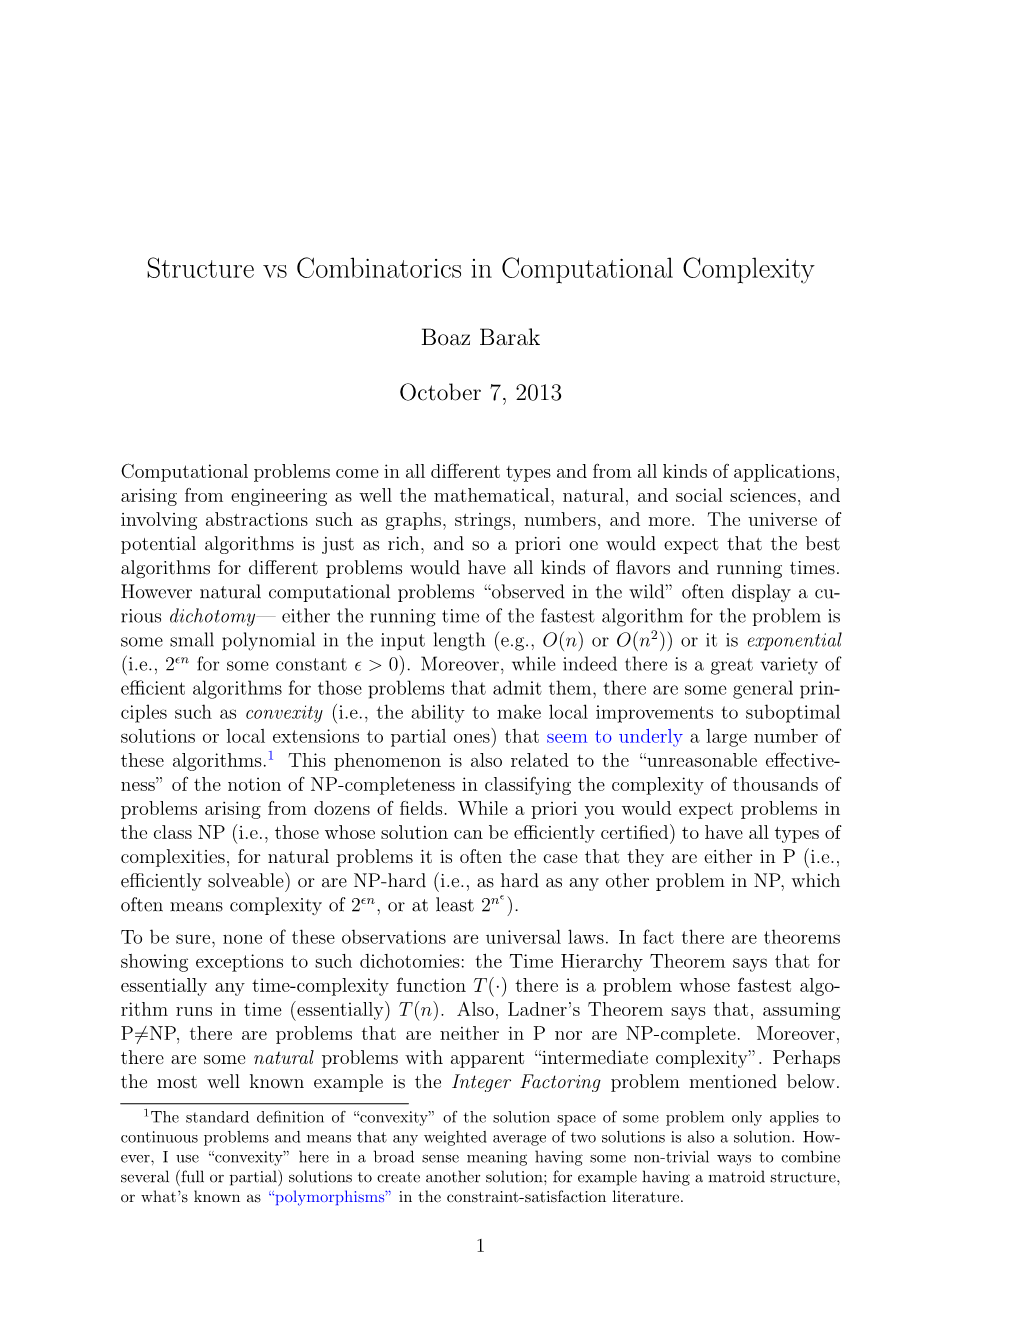 Structure Vs Combinatorics in Computational Complexity